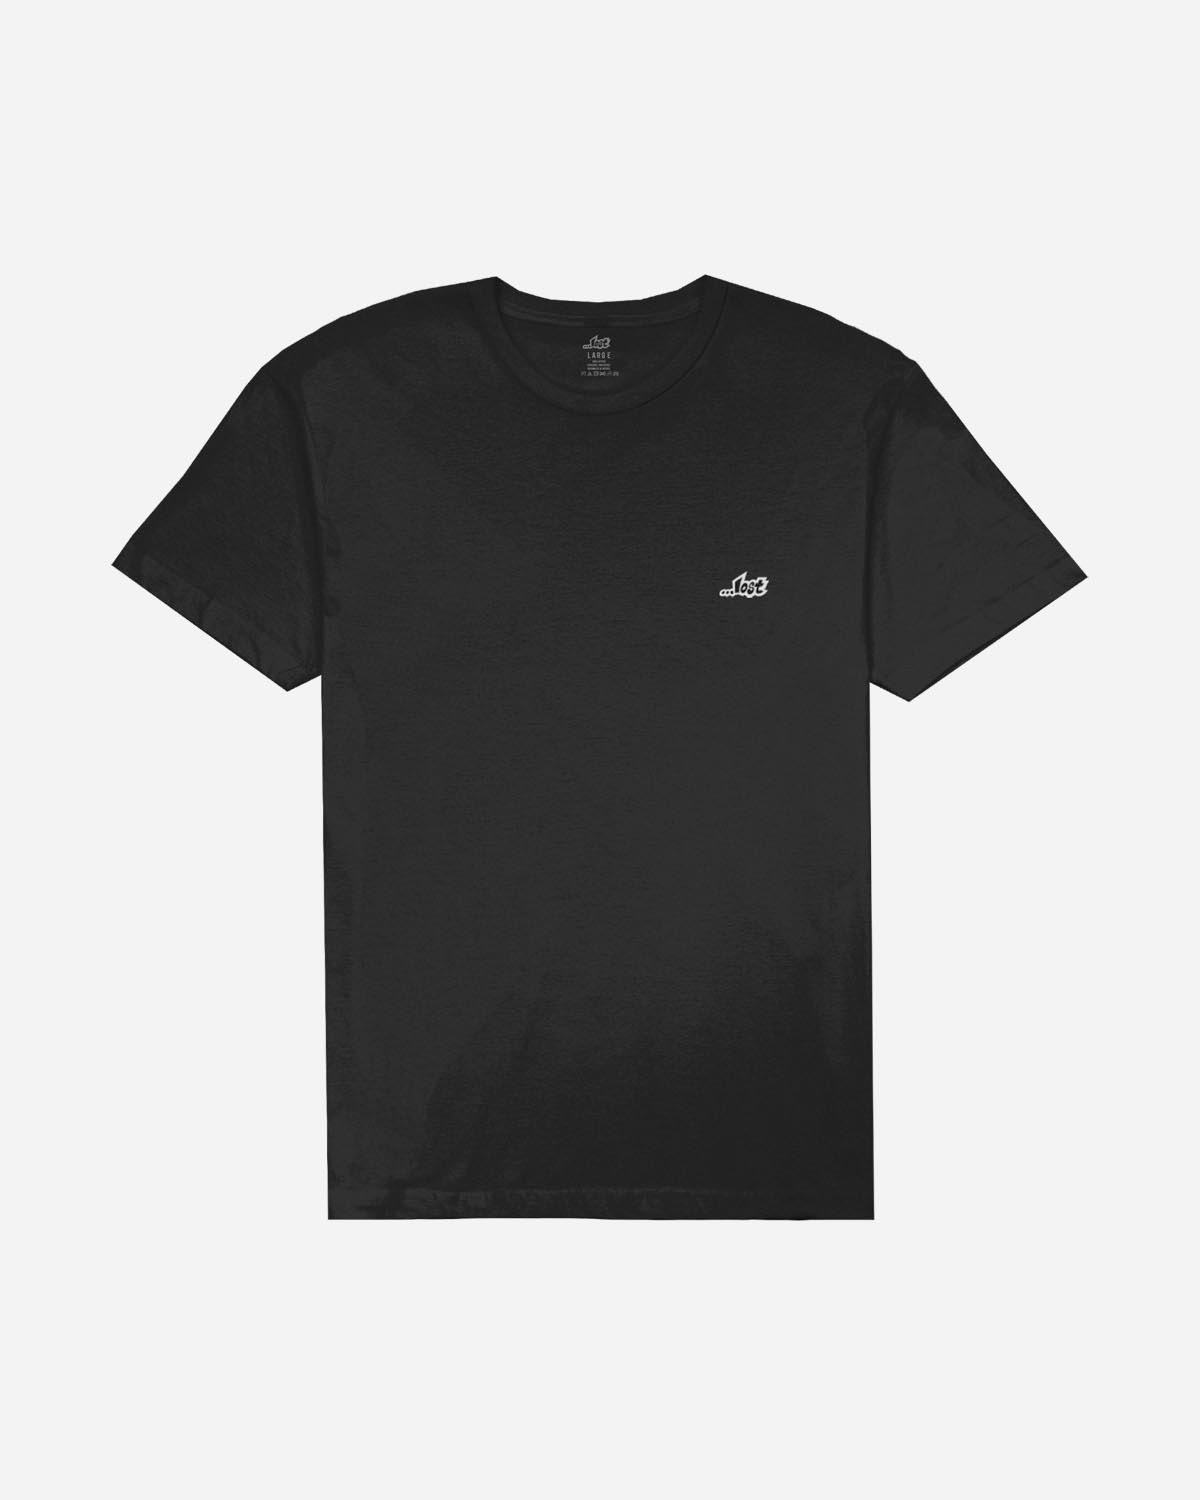 Getaway T-shirt Black - Black